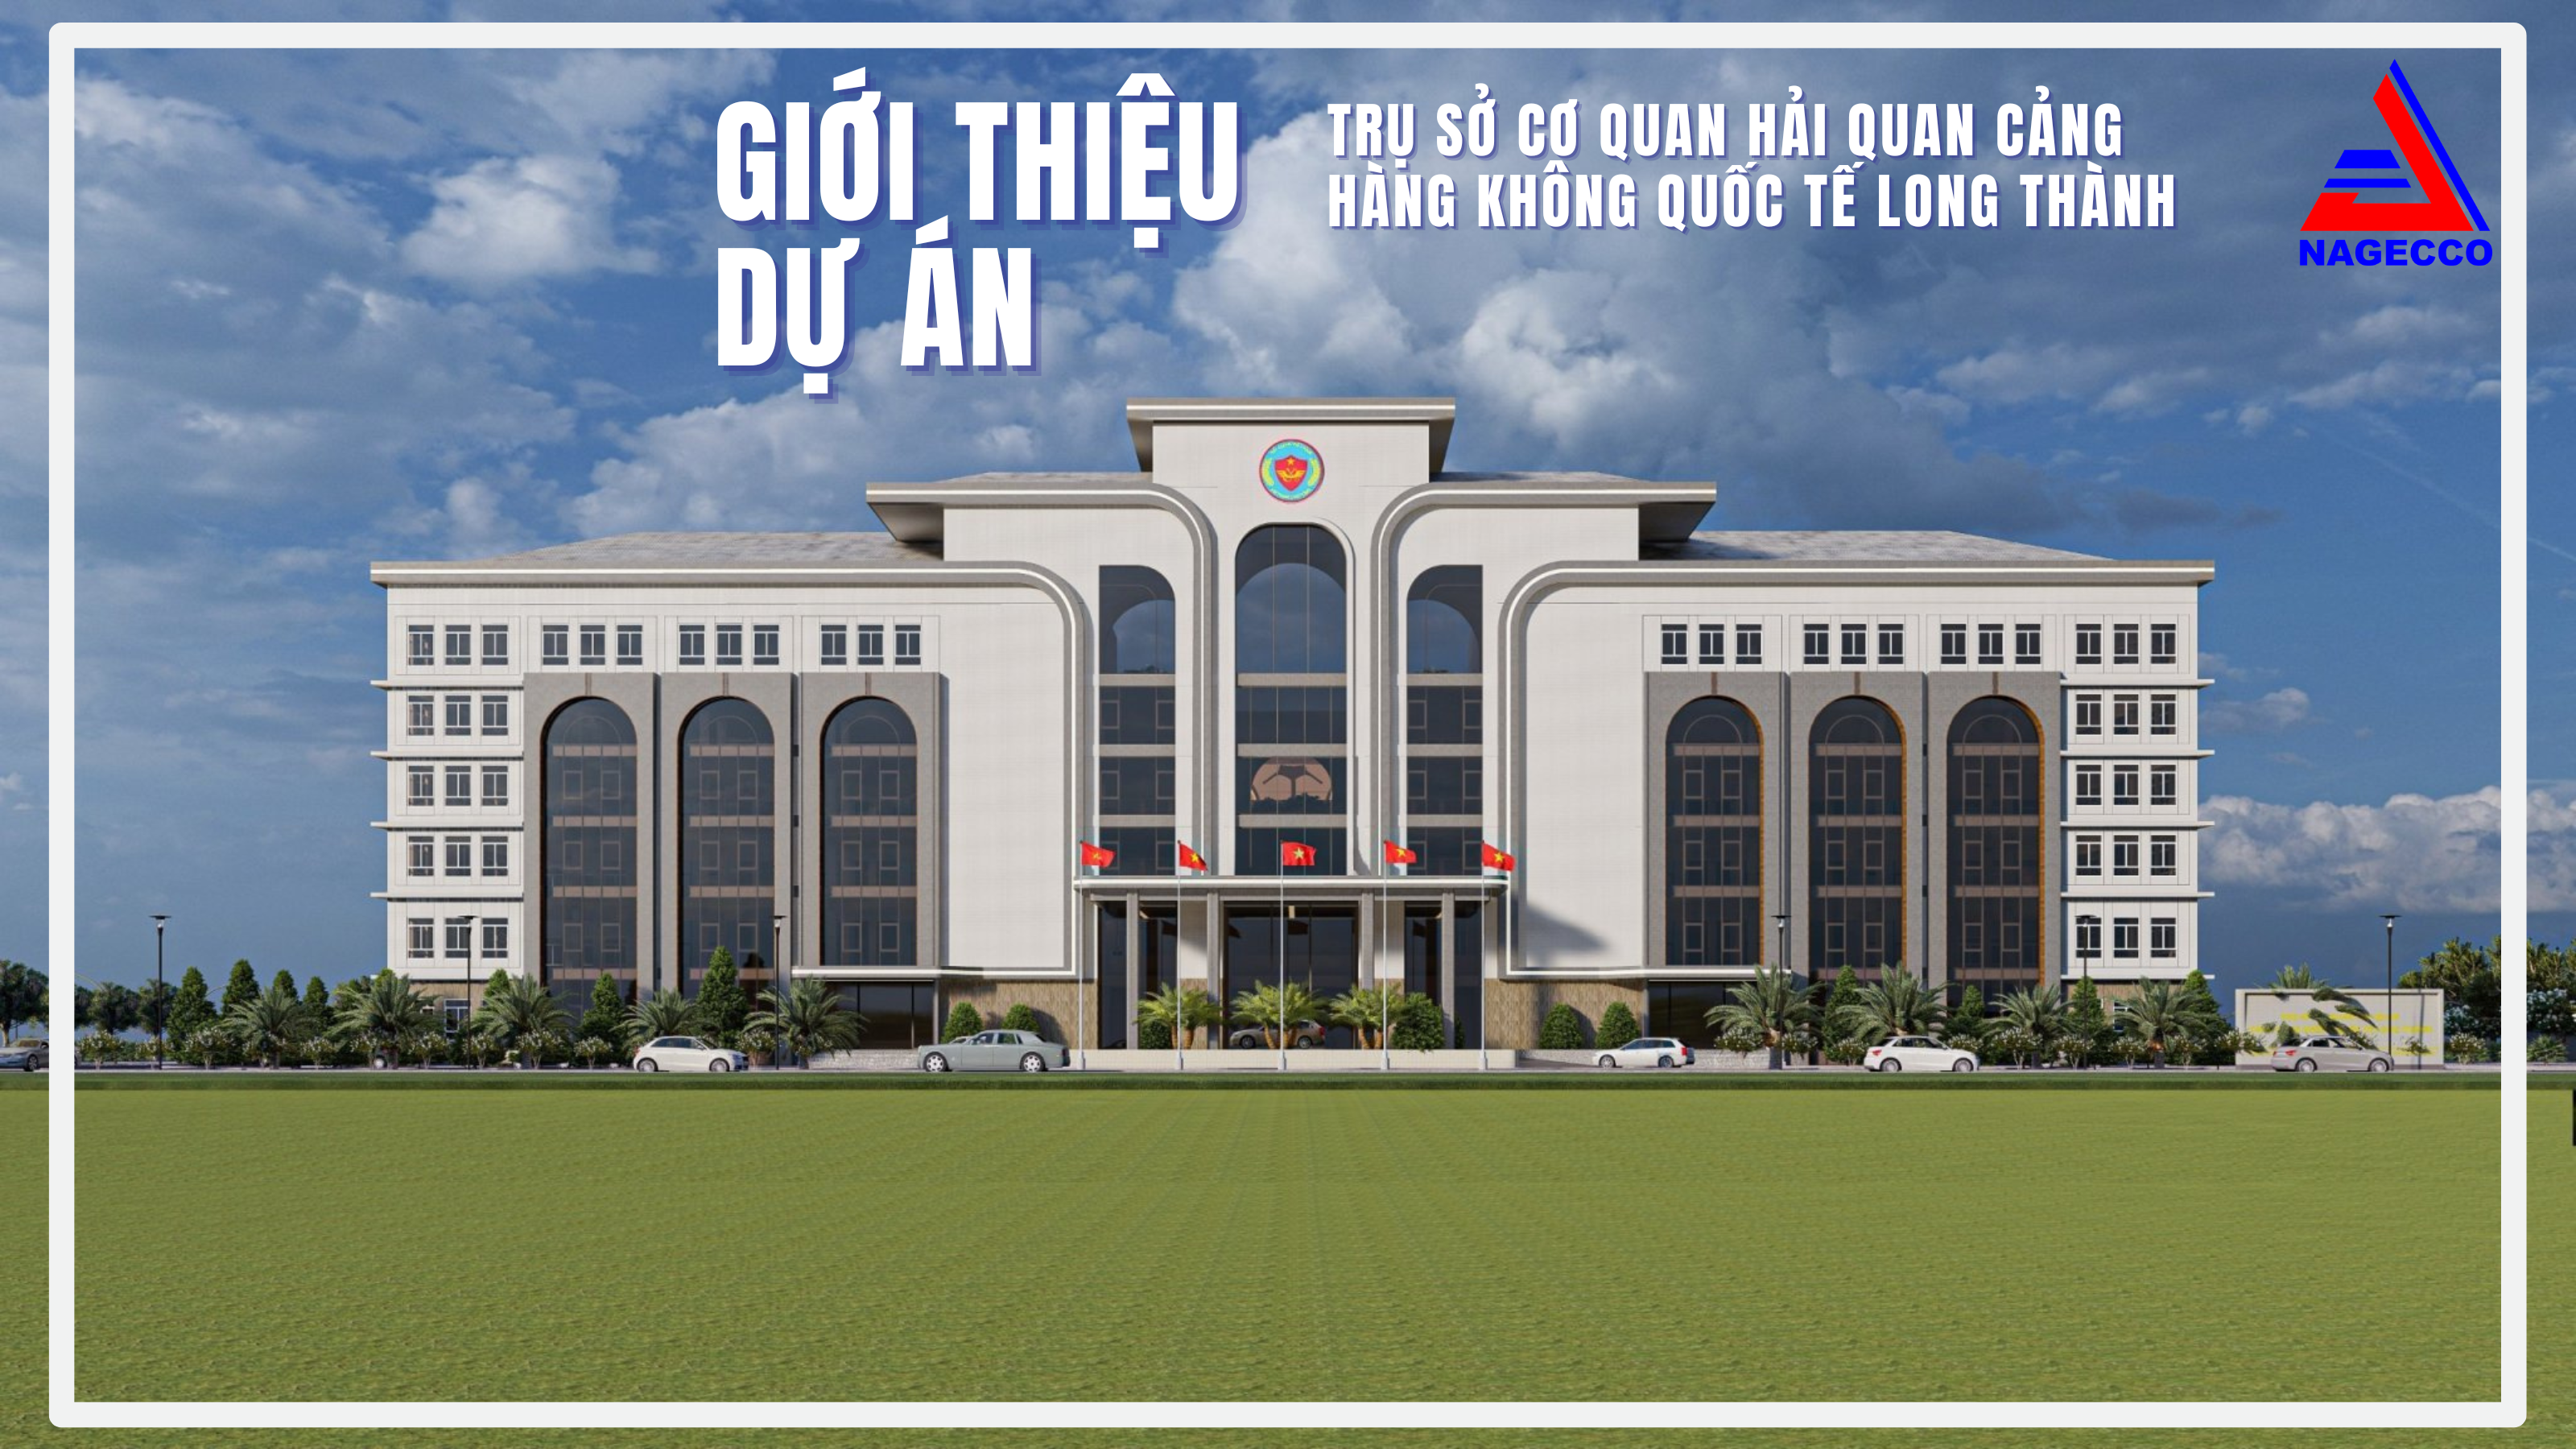 Long Thanh International Airport Customs Branch Headquarters